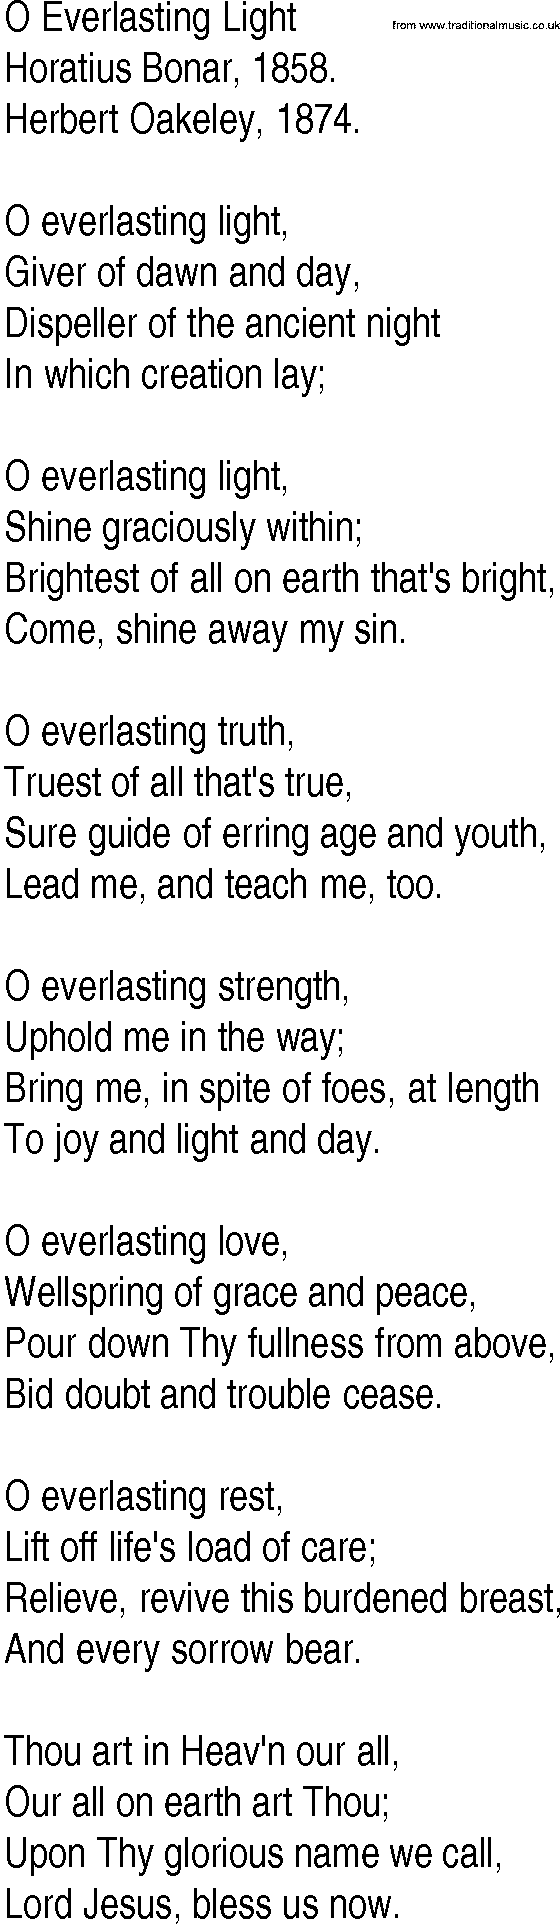 Hymn and Gospel Song: O Everlasting Light by Horatius Bonar lyrics